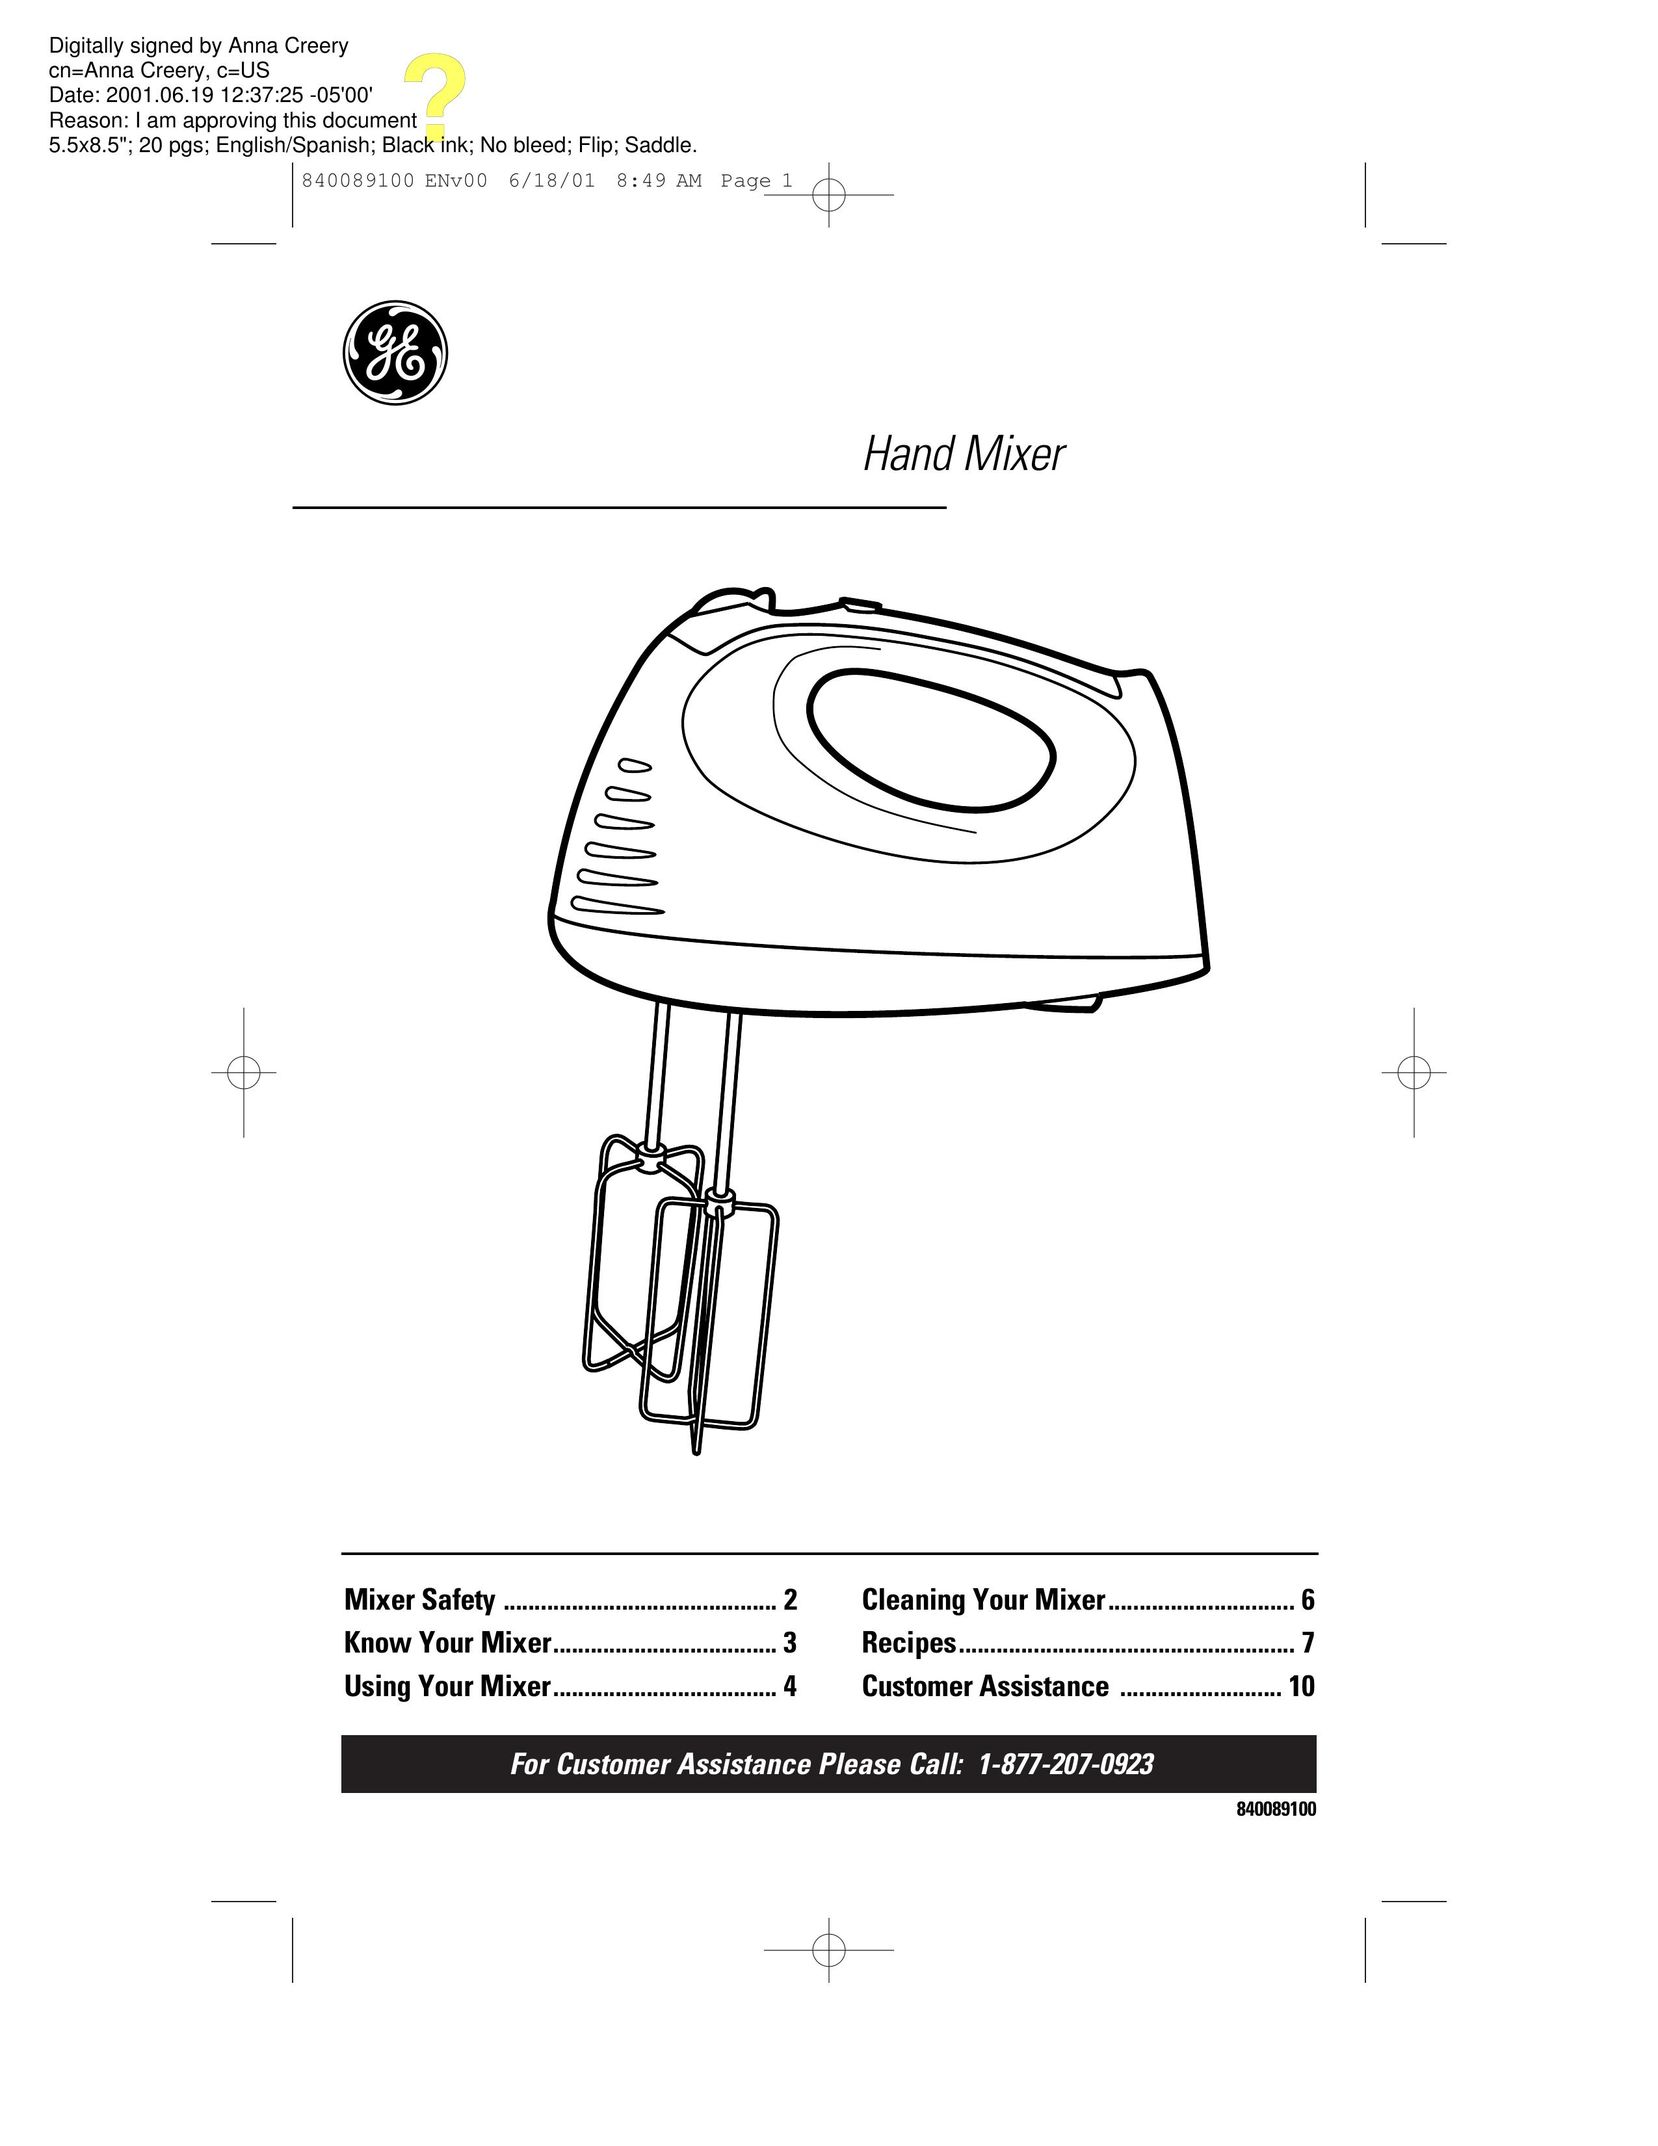 GE 840089100 Mixer User Manual